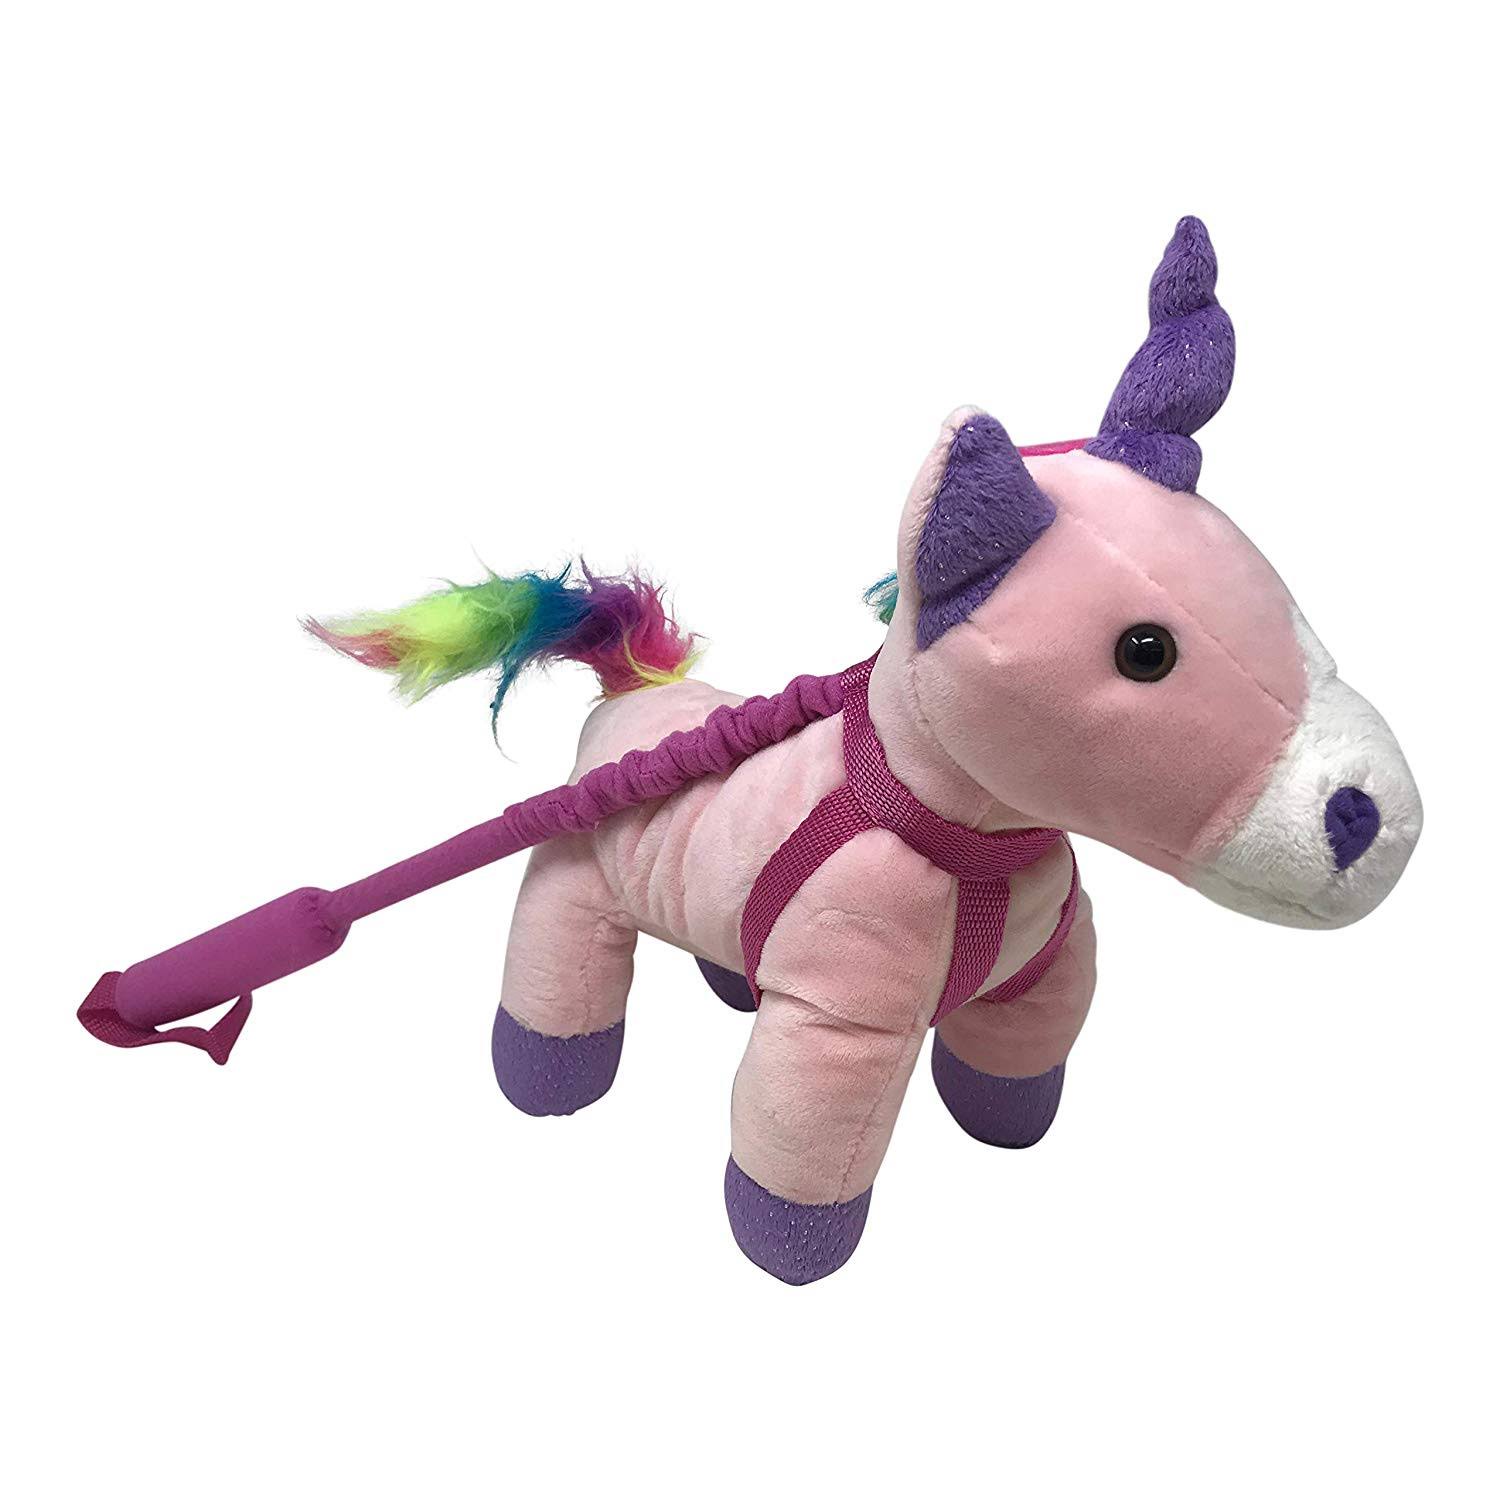 Fun Stuff Plush Stuffed Animal Toy- Pink Unicorn On A Retractable/Removable Pink Leash | Fun Stuff | Stuffed Animals & Plush | Best Price Guarante